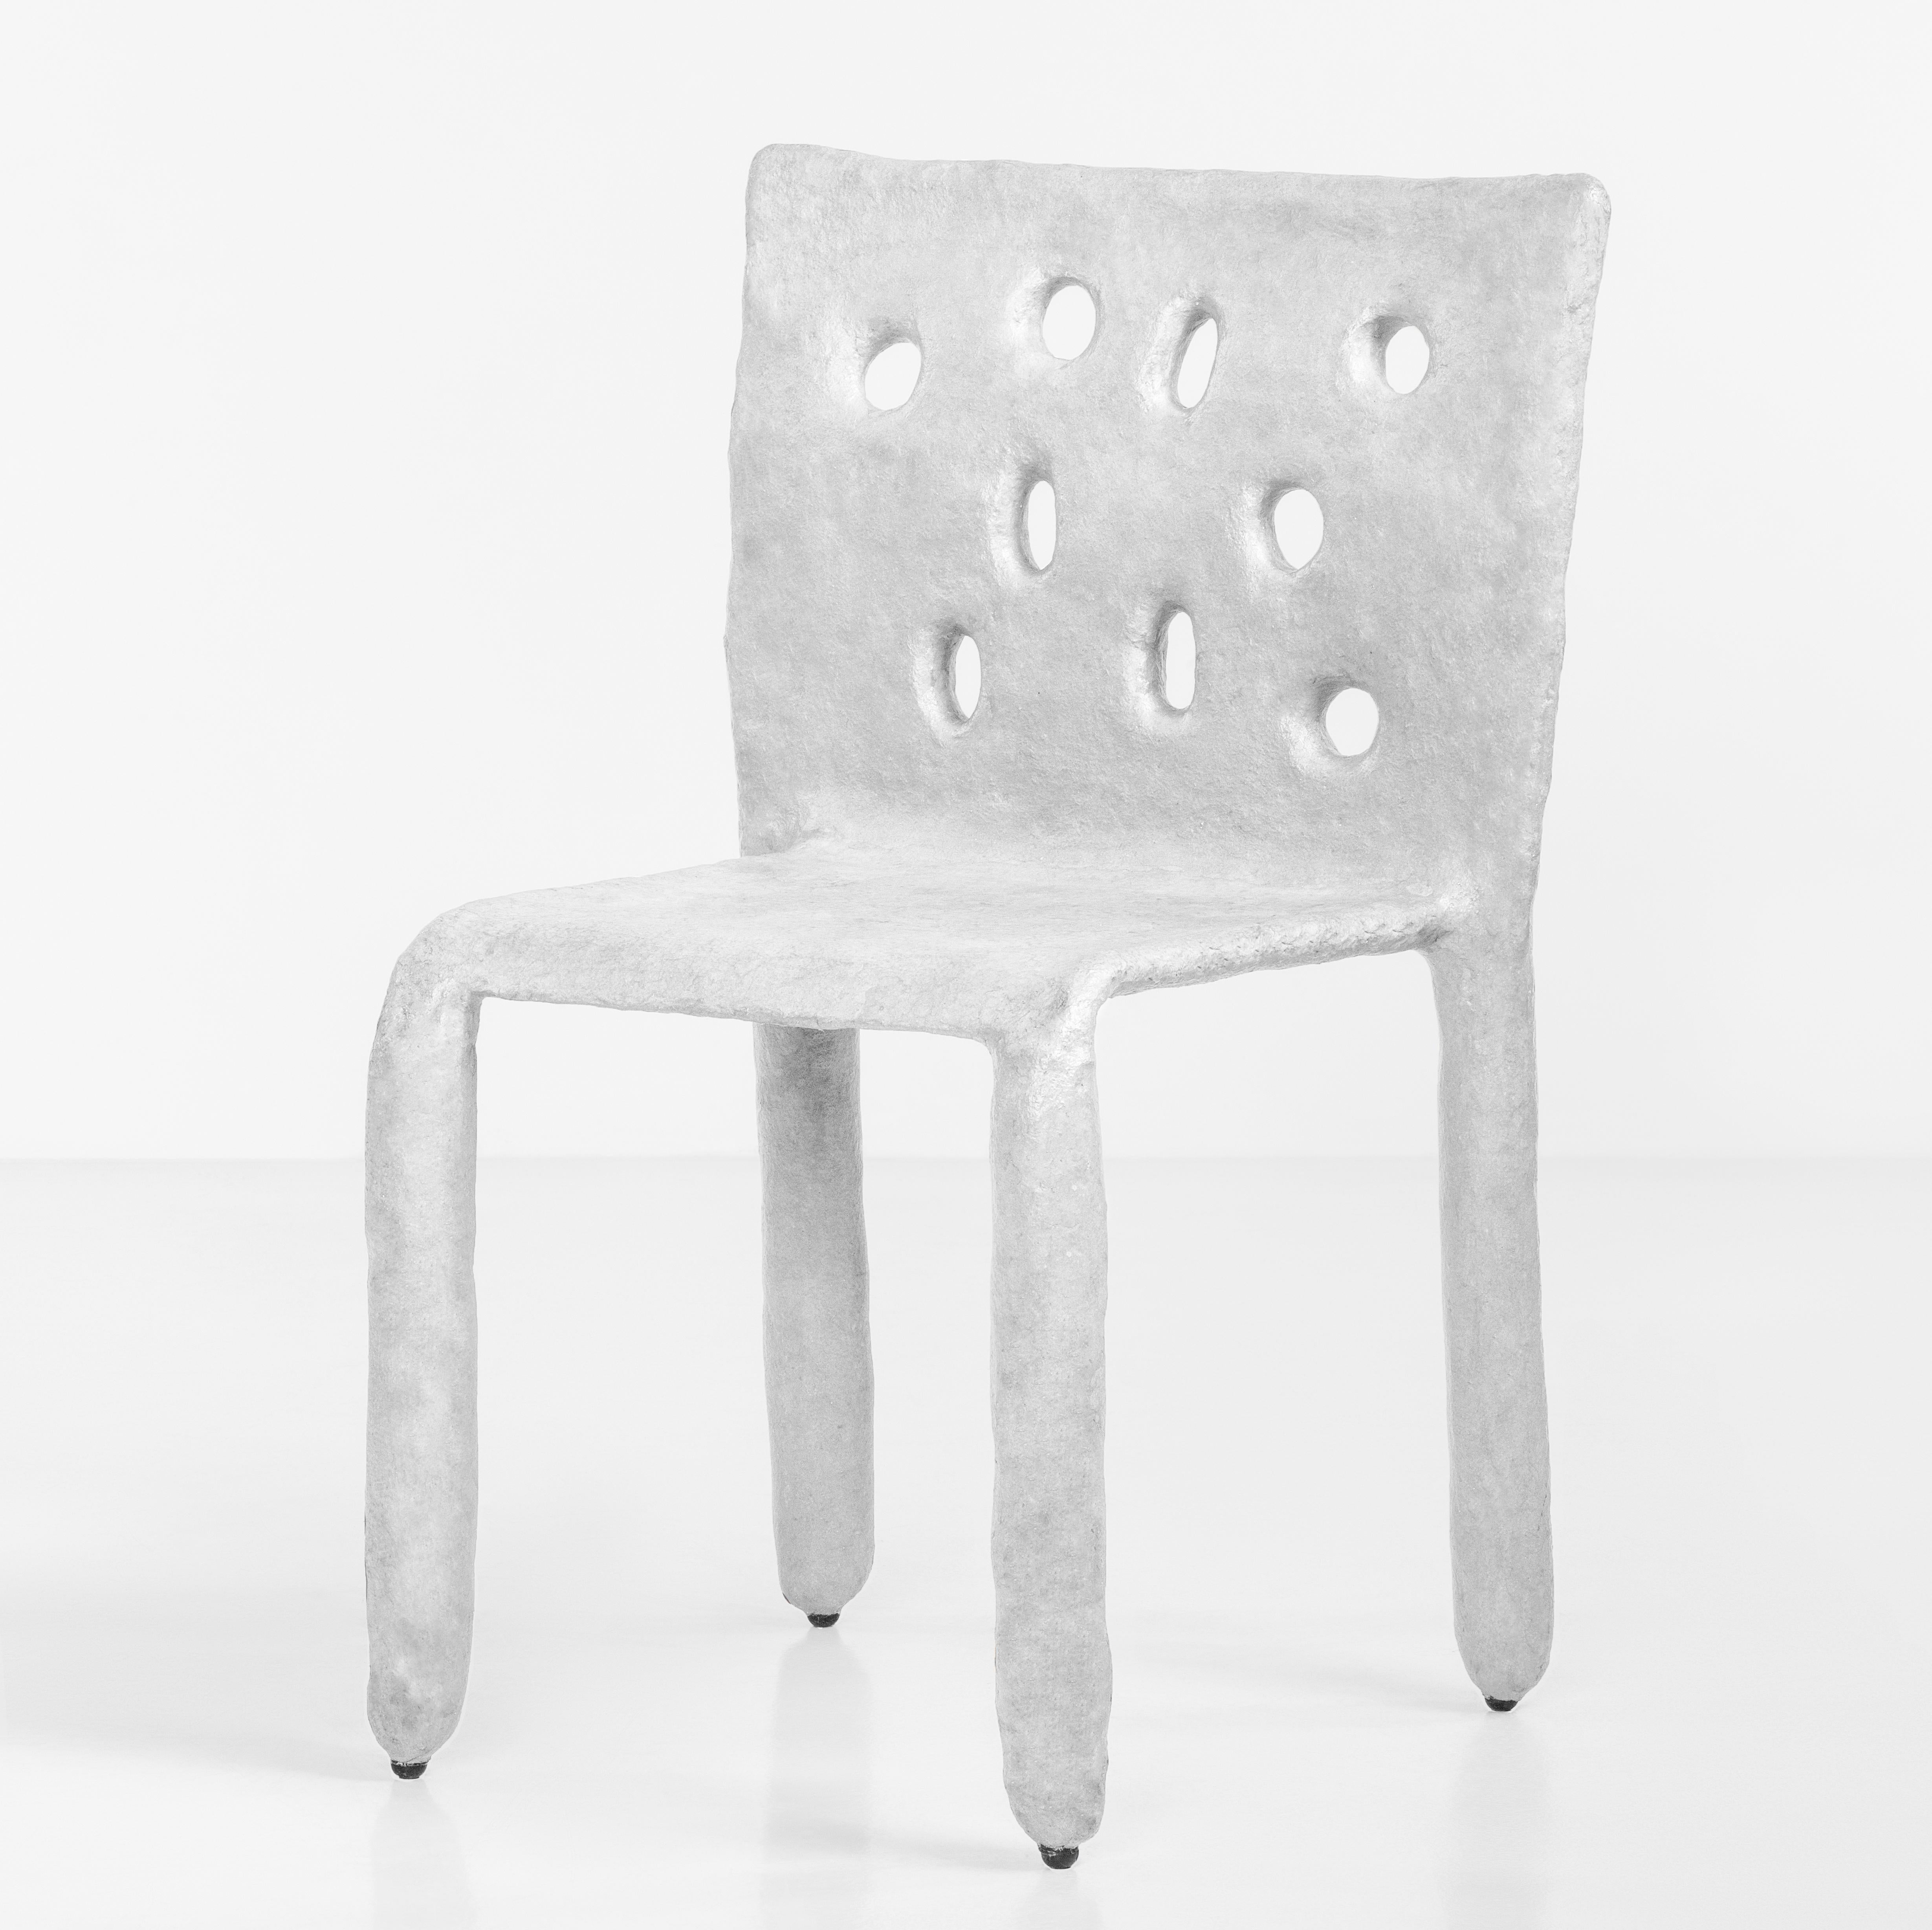 Blue Sculpted Contemporary Chair by FAINA 1